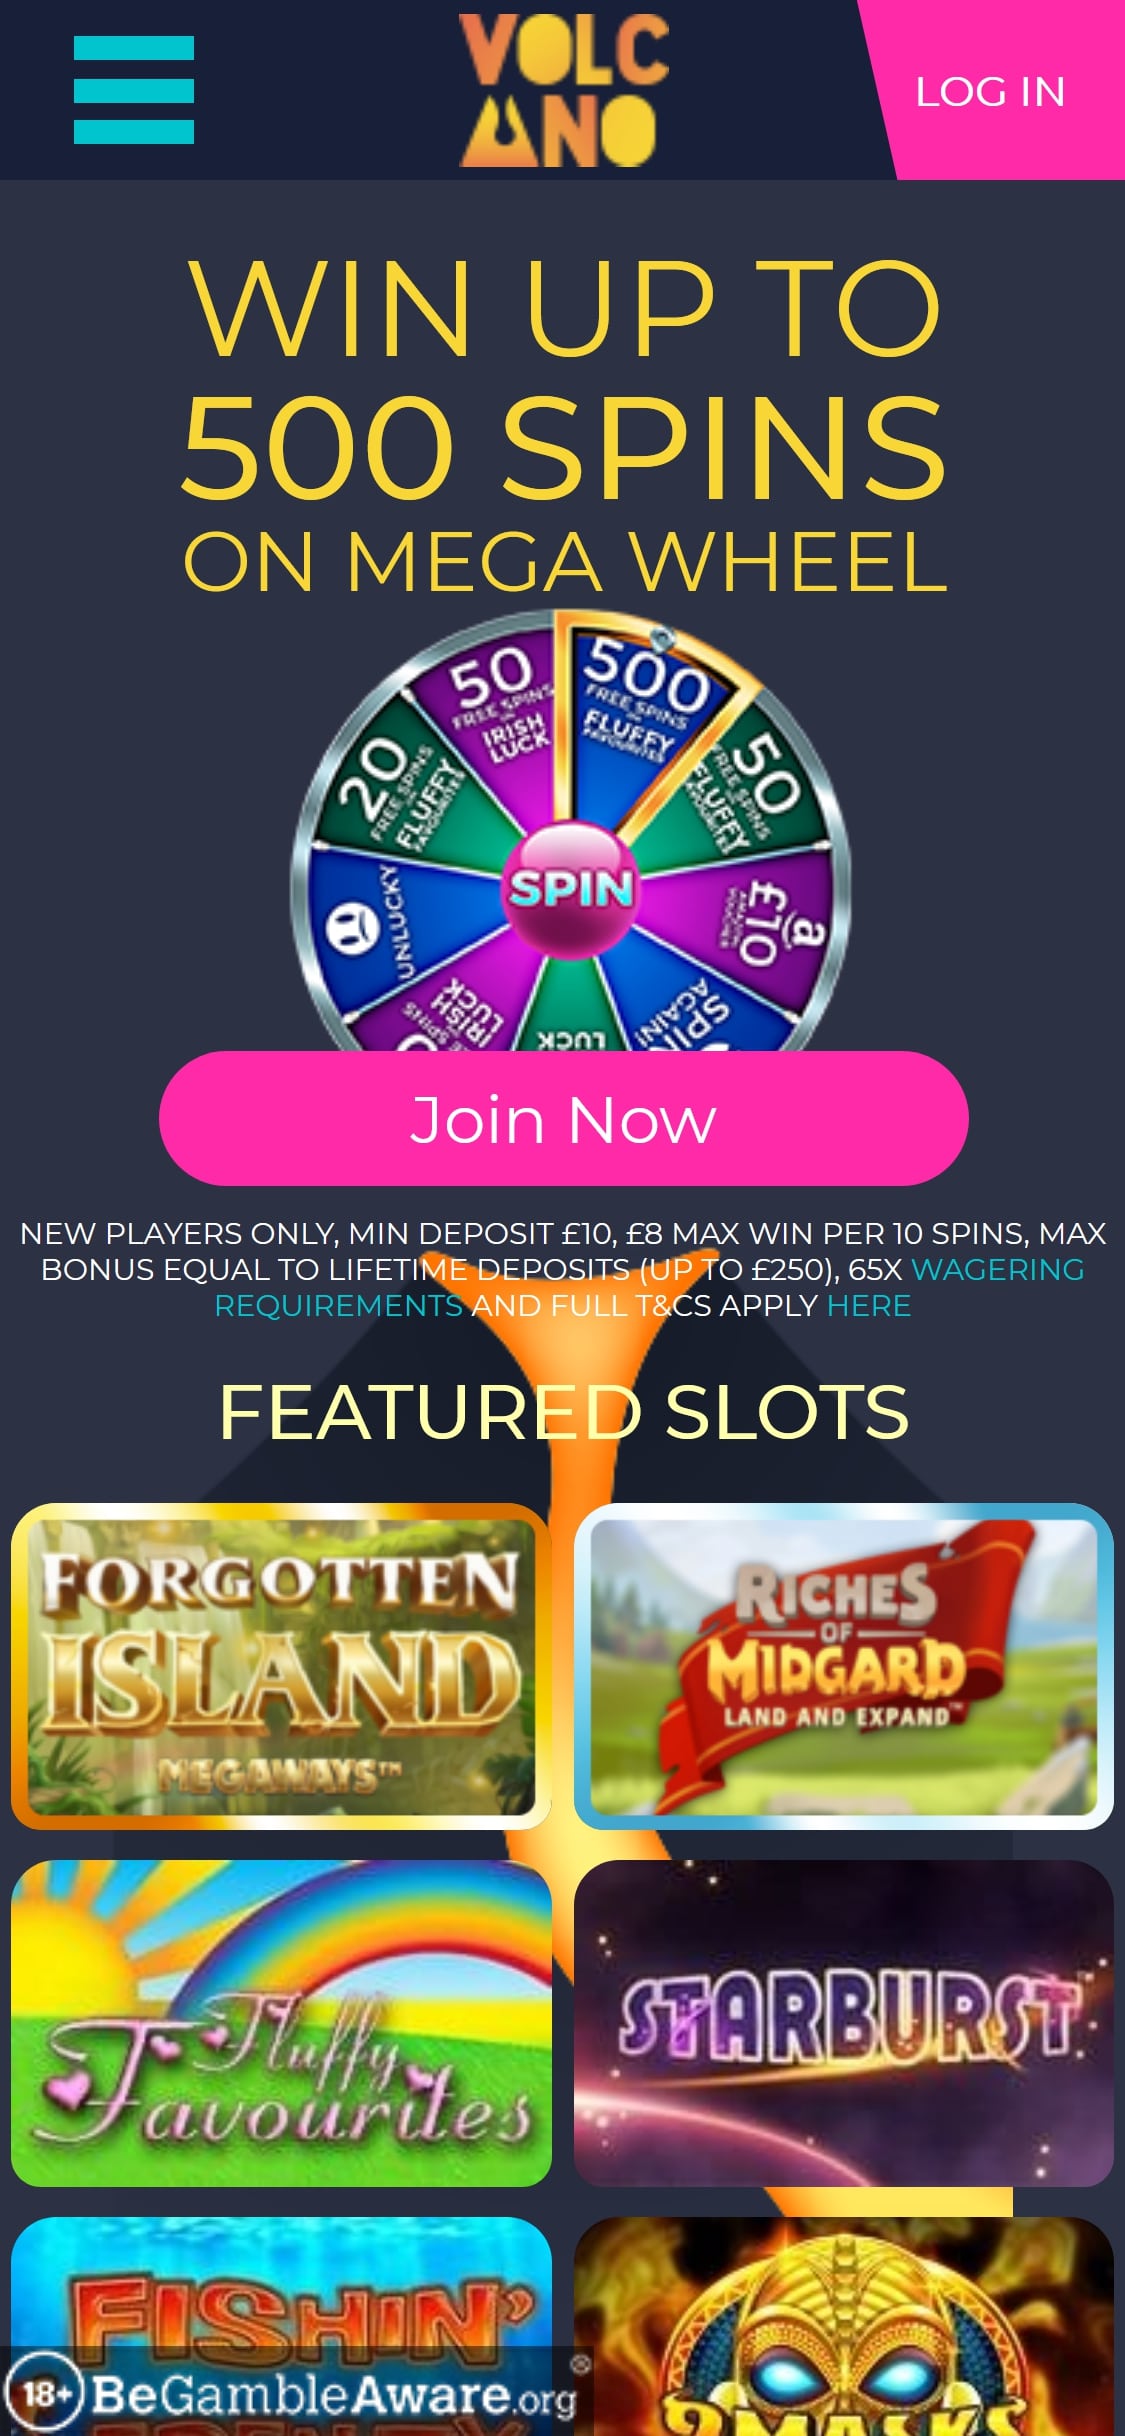 Volcano Bingo Casino Mobile Review